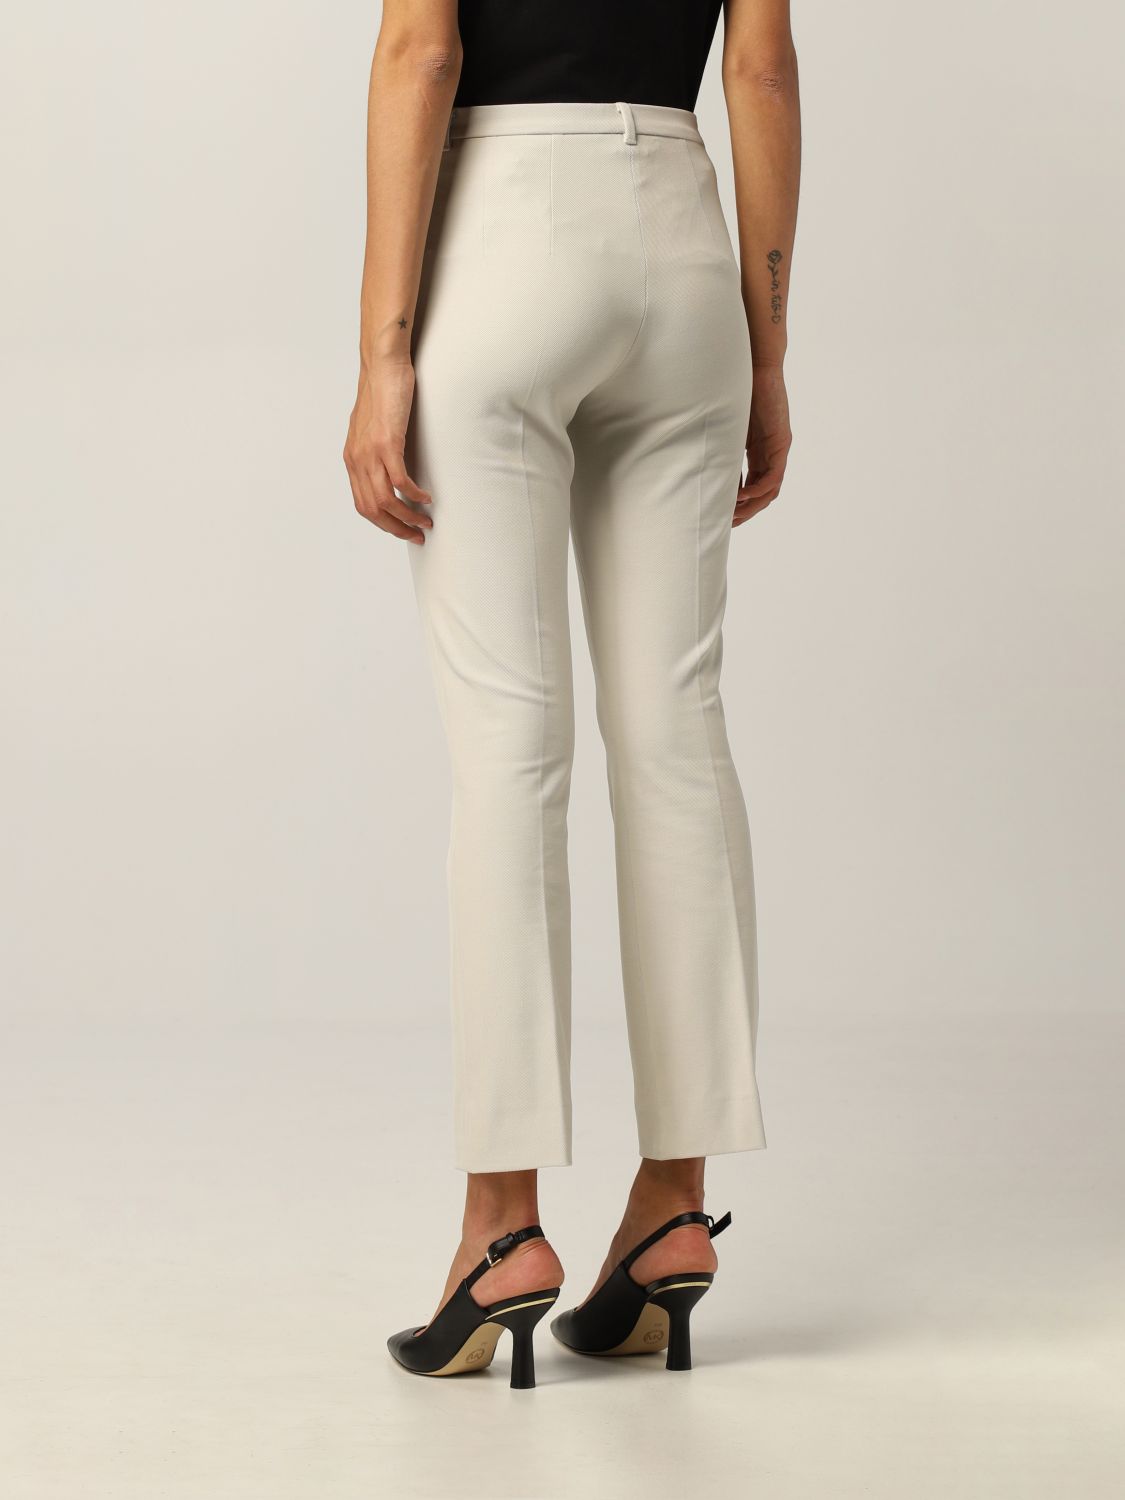 Pantalone S Max Mara: Pantalone elegante S Max Mara bianco 3